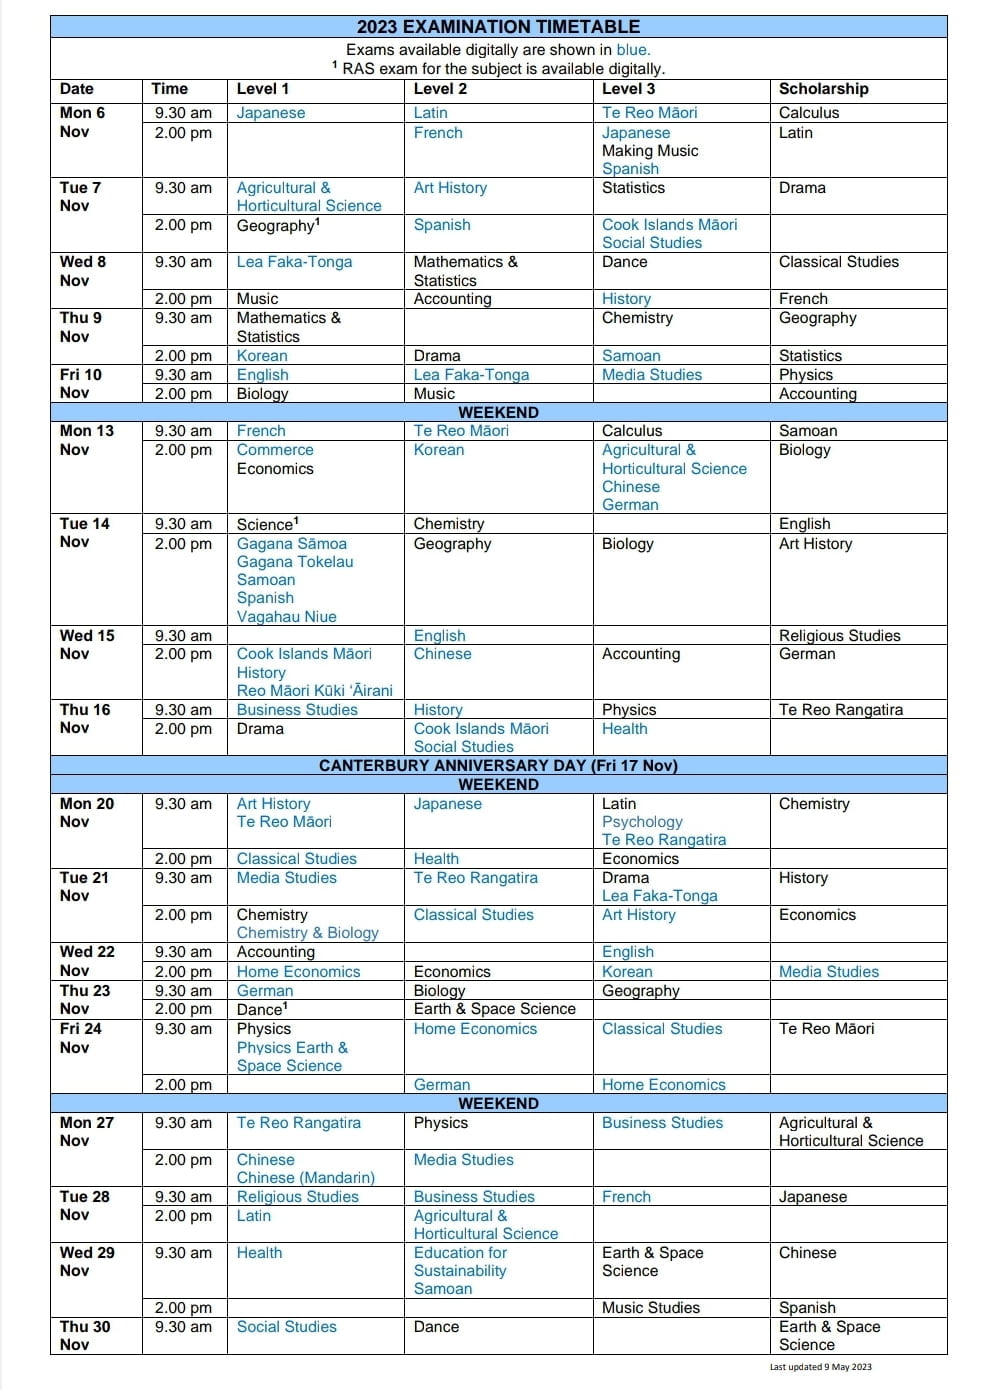 NCEA Examination Timetable 2023